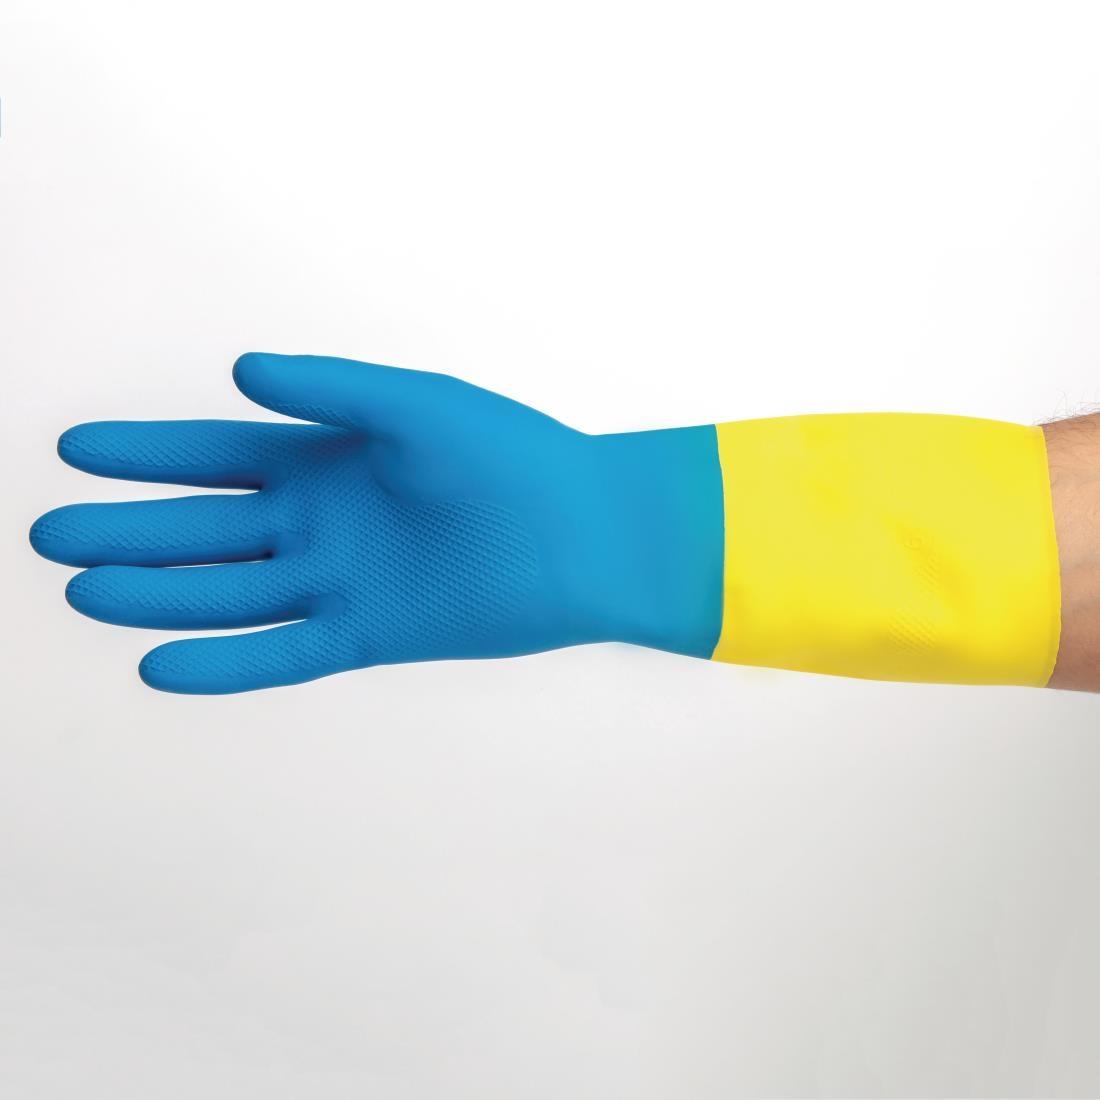 MAPA Alto 405 Liquid-Proof Heavy-Duty Janitorial Gloves Blue and Yellow Extra Large - FA296-XL  - 6